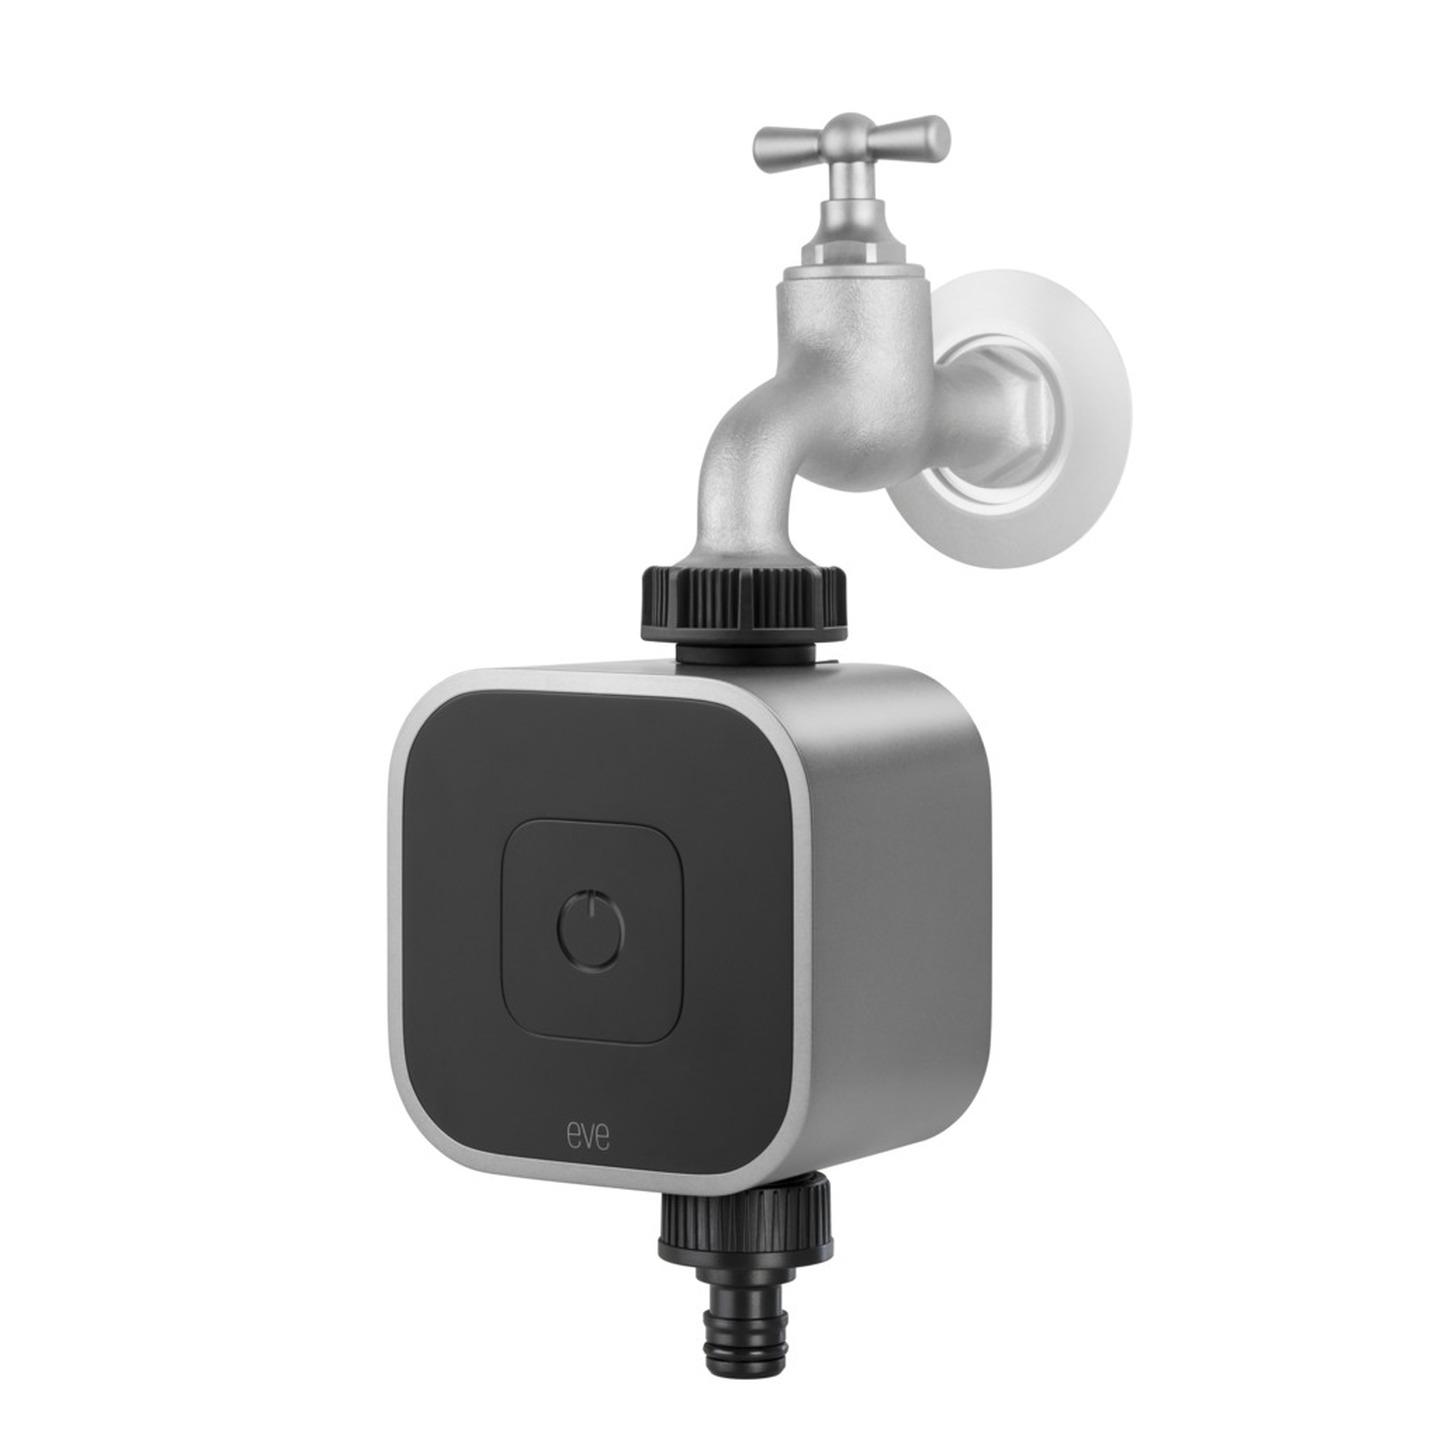 Eve Aqua - Smart Water Controller Thread